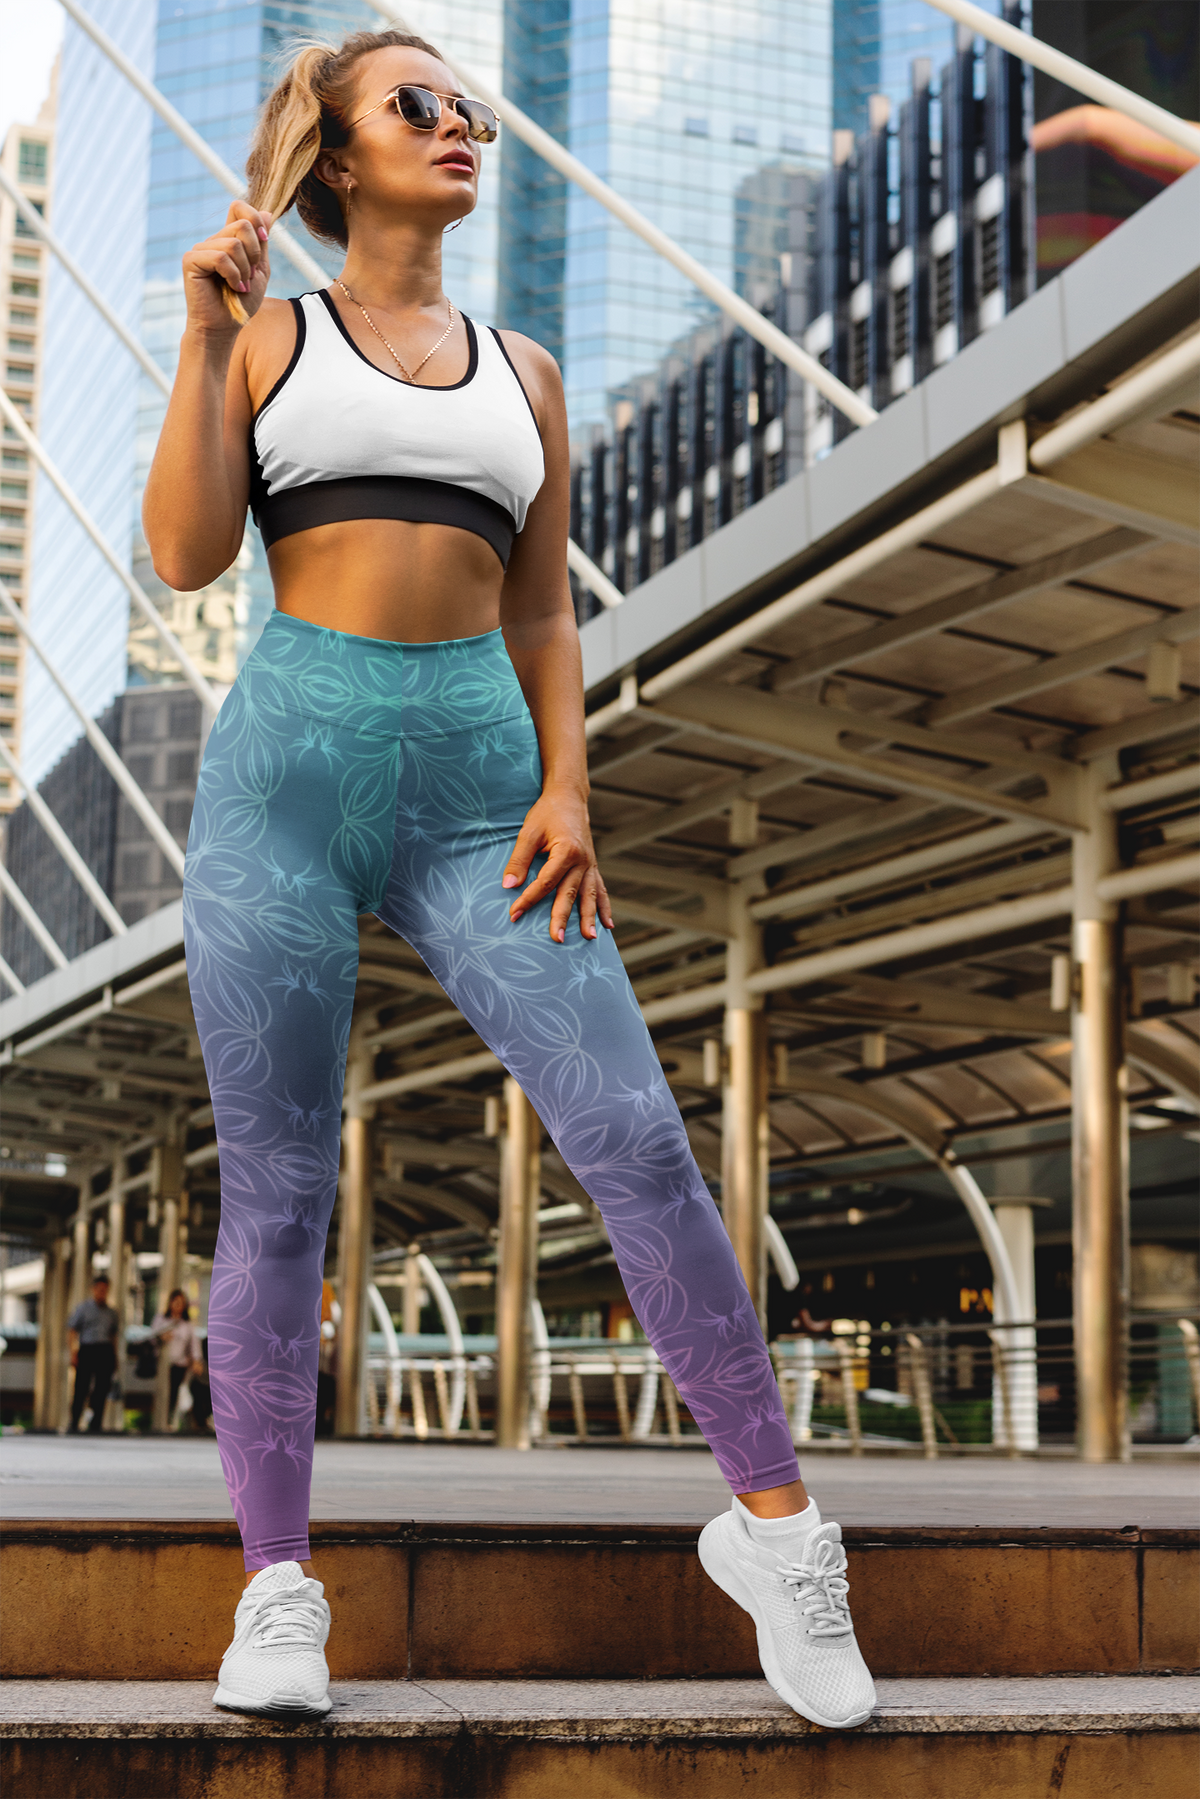 AbsoluteFit Abstract Printed Pantyhose | Anti-Squat | Women's workout tights | 4-way stretch | Yoga, Gym, Cardio leggings | Women's Sportswear | sports leggings